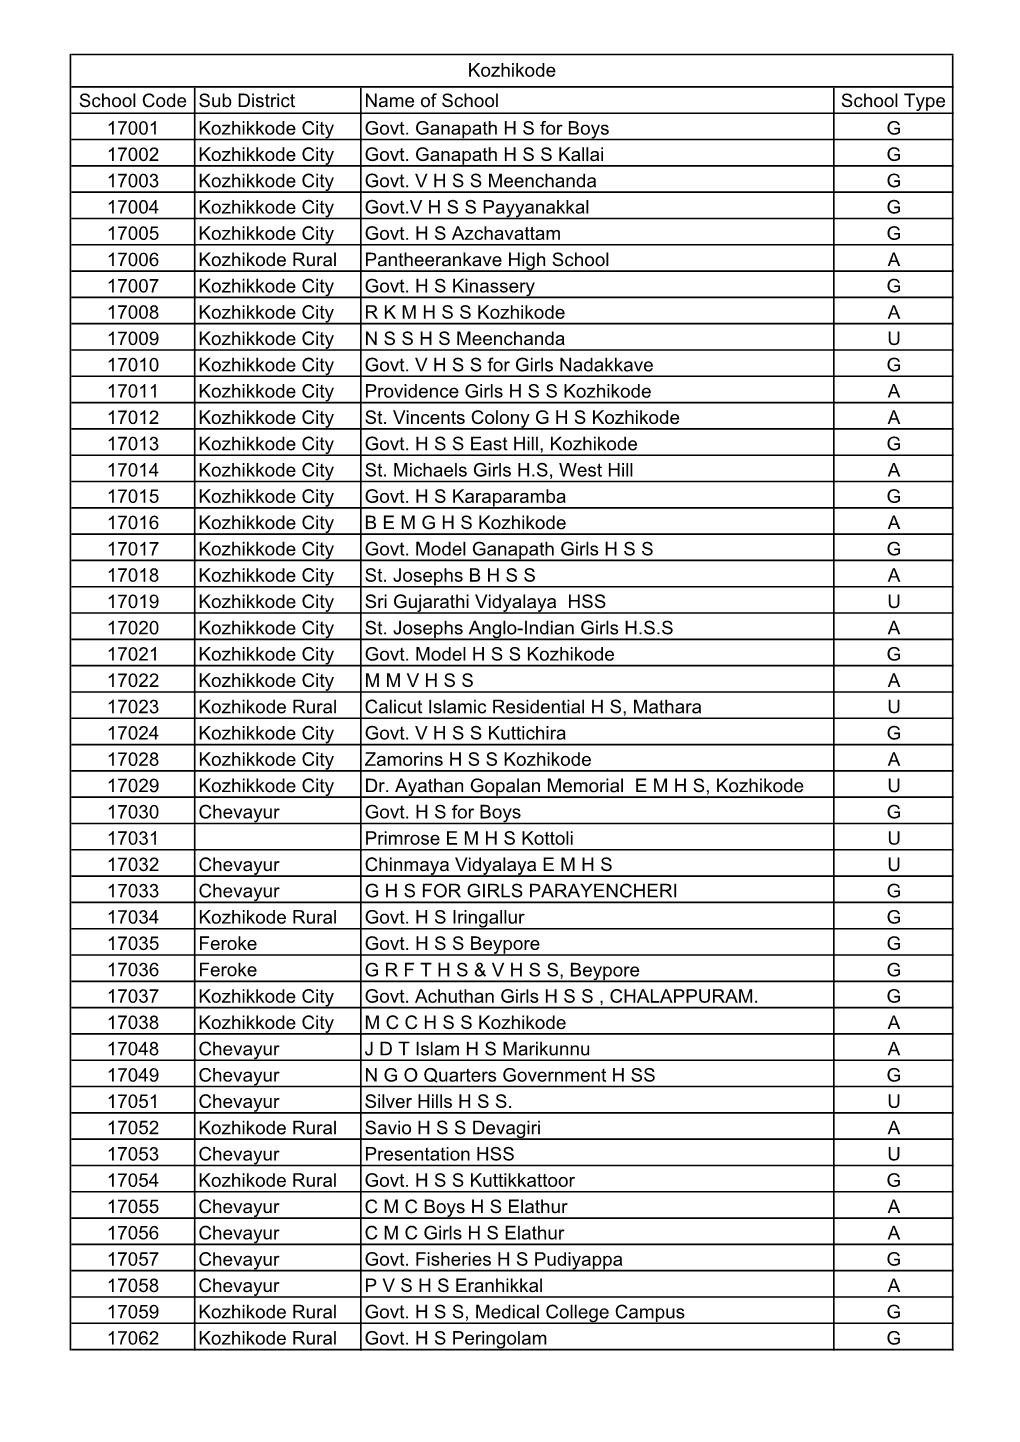 Kozhikode School Code Sub District Name of School School Type 17001 Kozhikkode City Govt